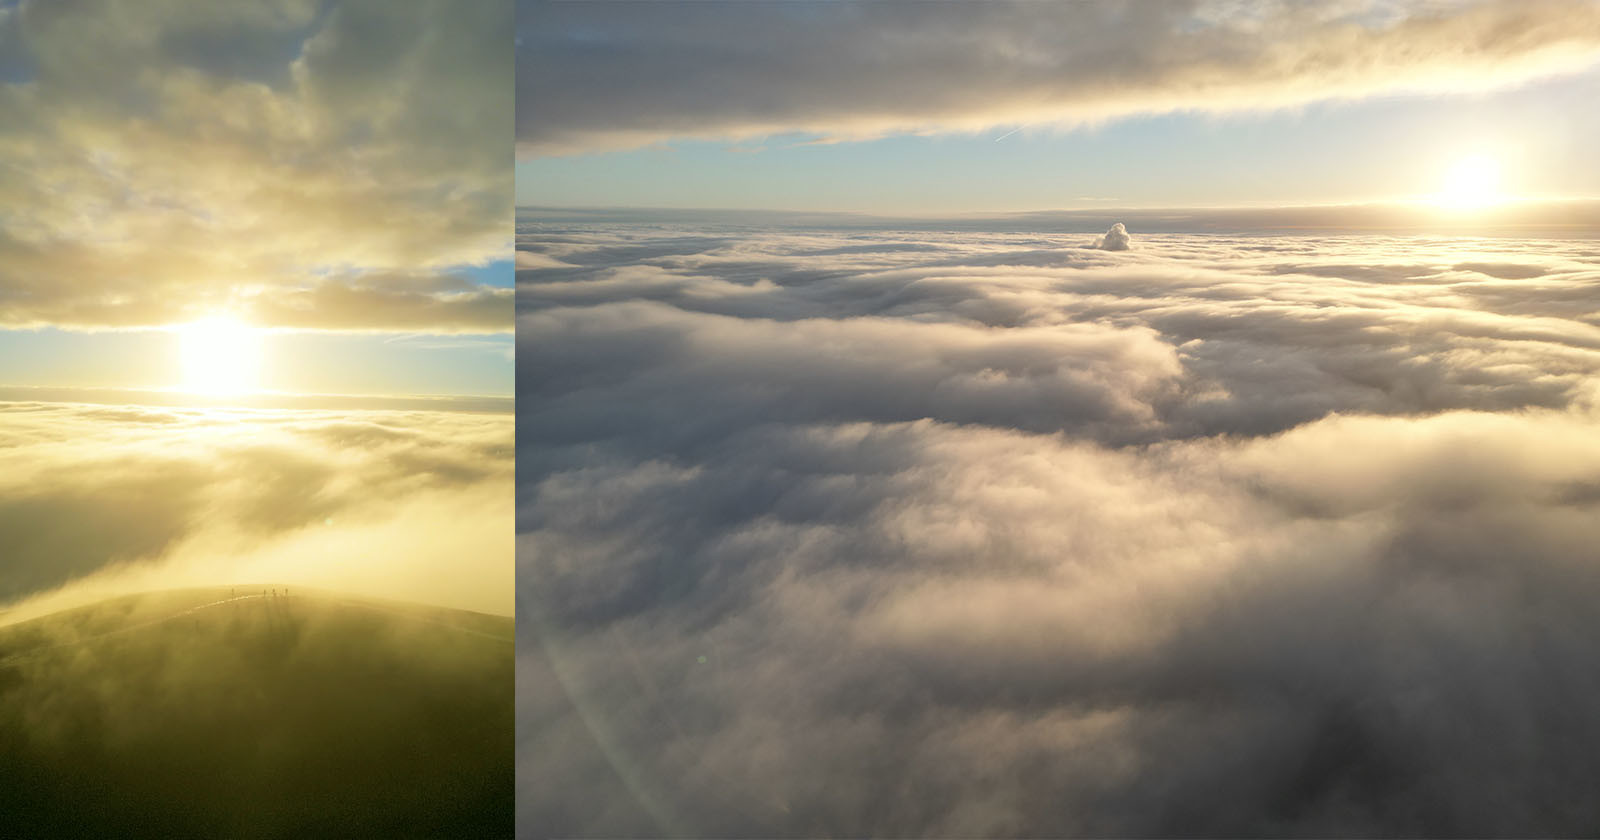  photographer captures spectacular cloud inversion phenomenon 